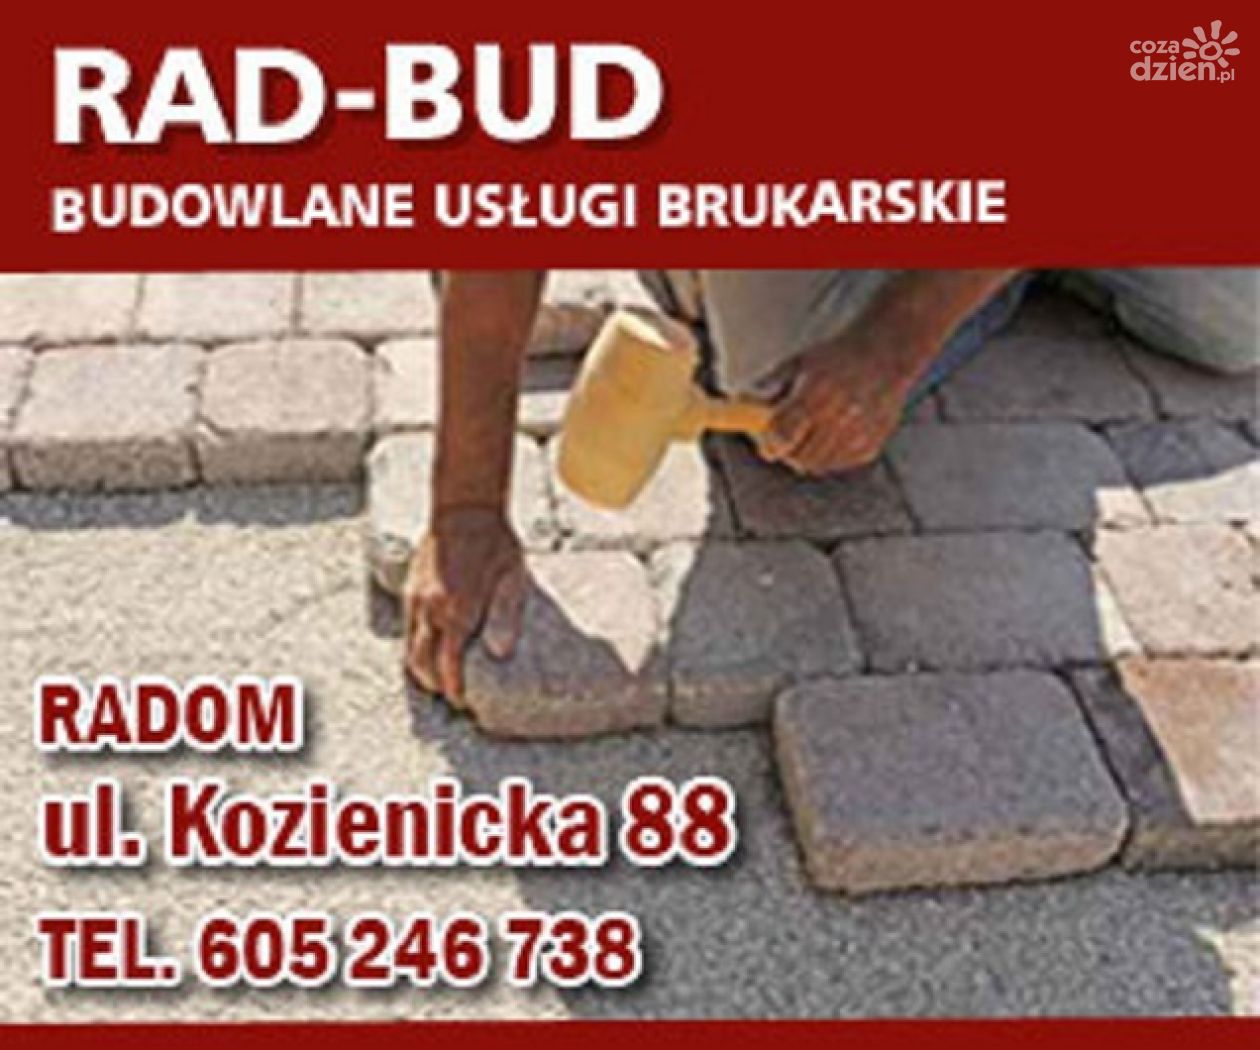 Rad-Bud - usługi brukarskie